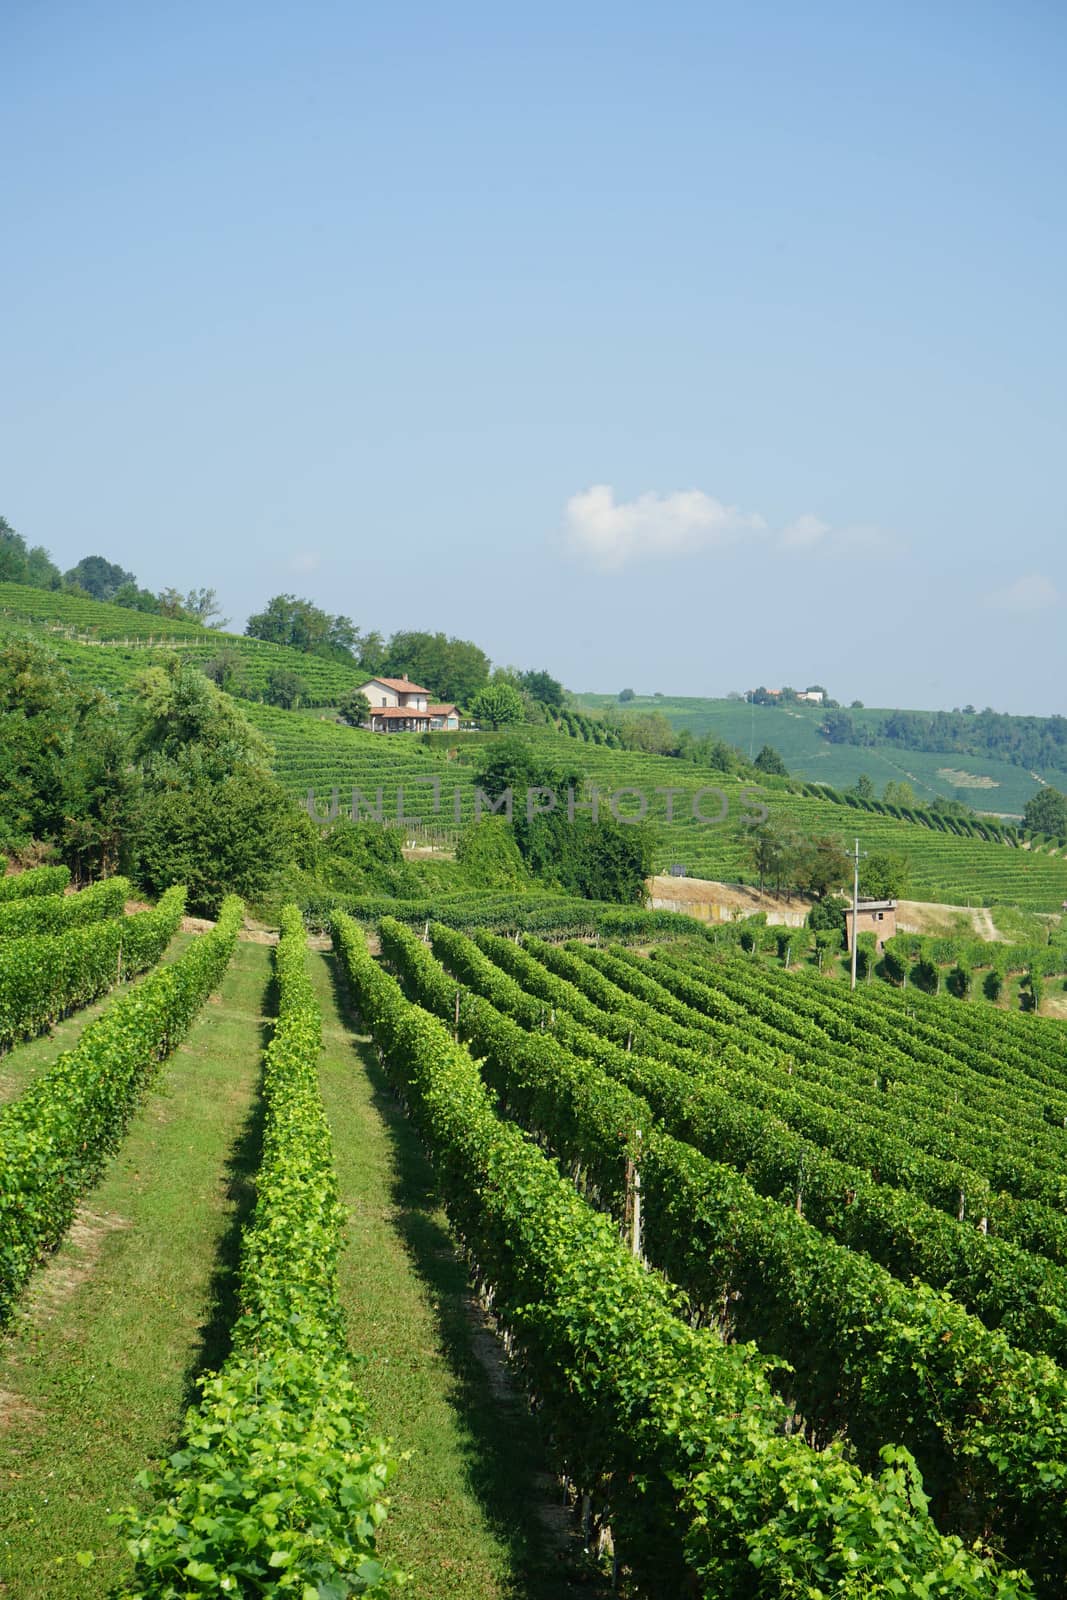 Vineyards near the village of La Morra, Piedmont - Italy